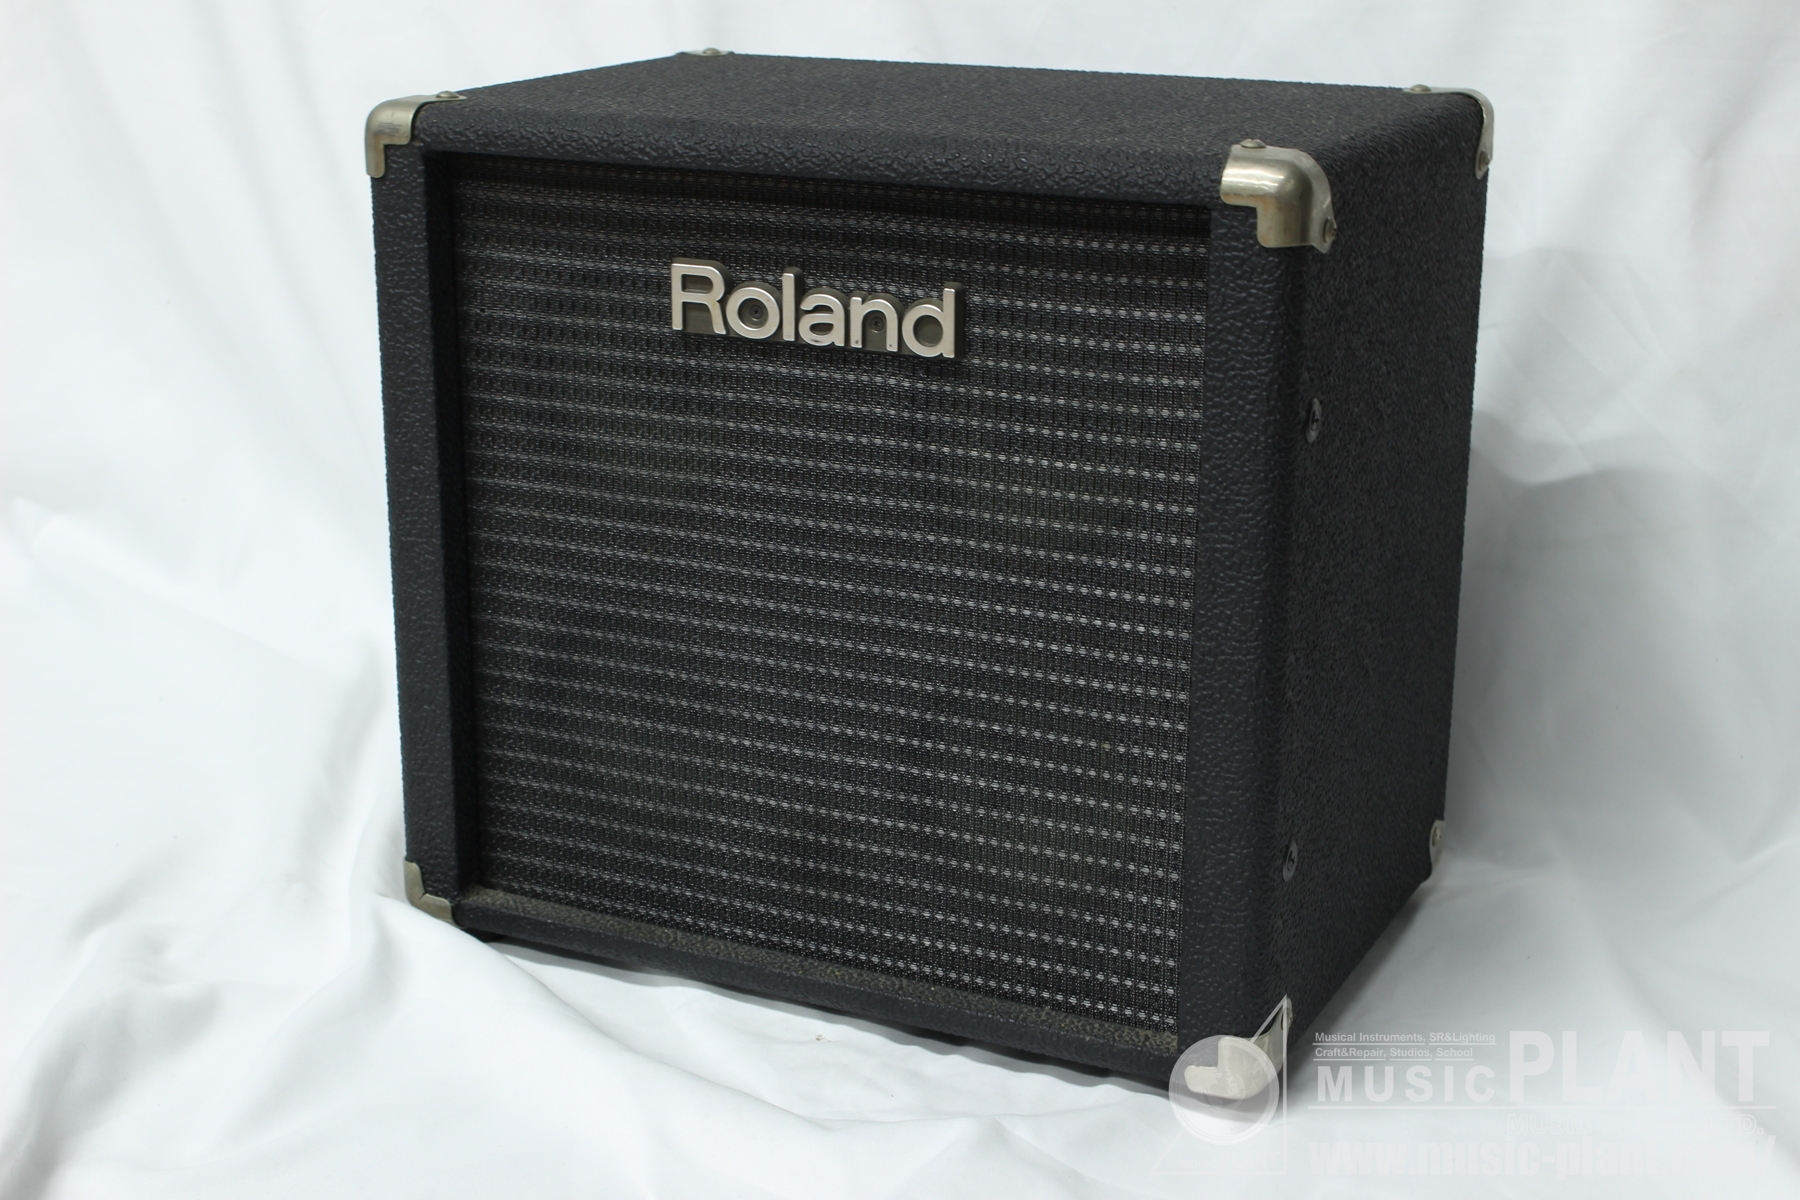 Roland キャビネットGC-405S中古品()売却済みです。あしからずご了承 